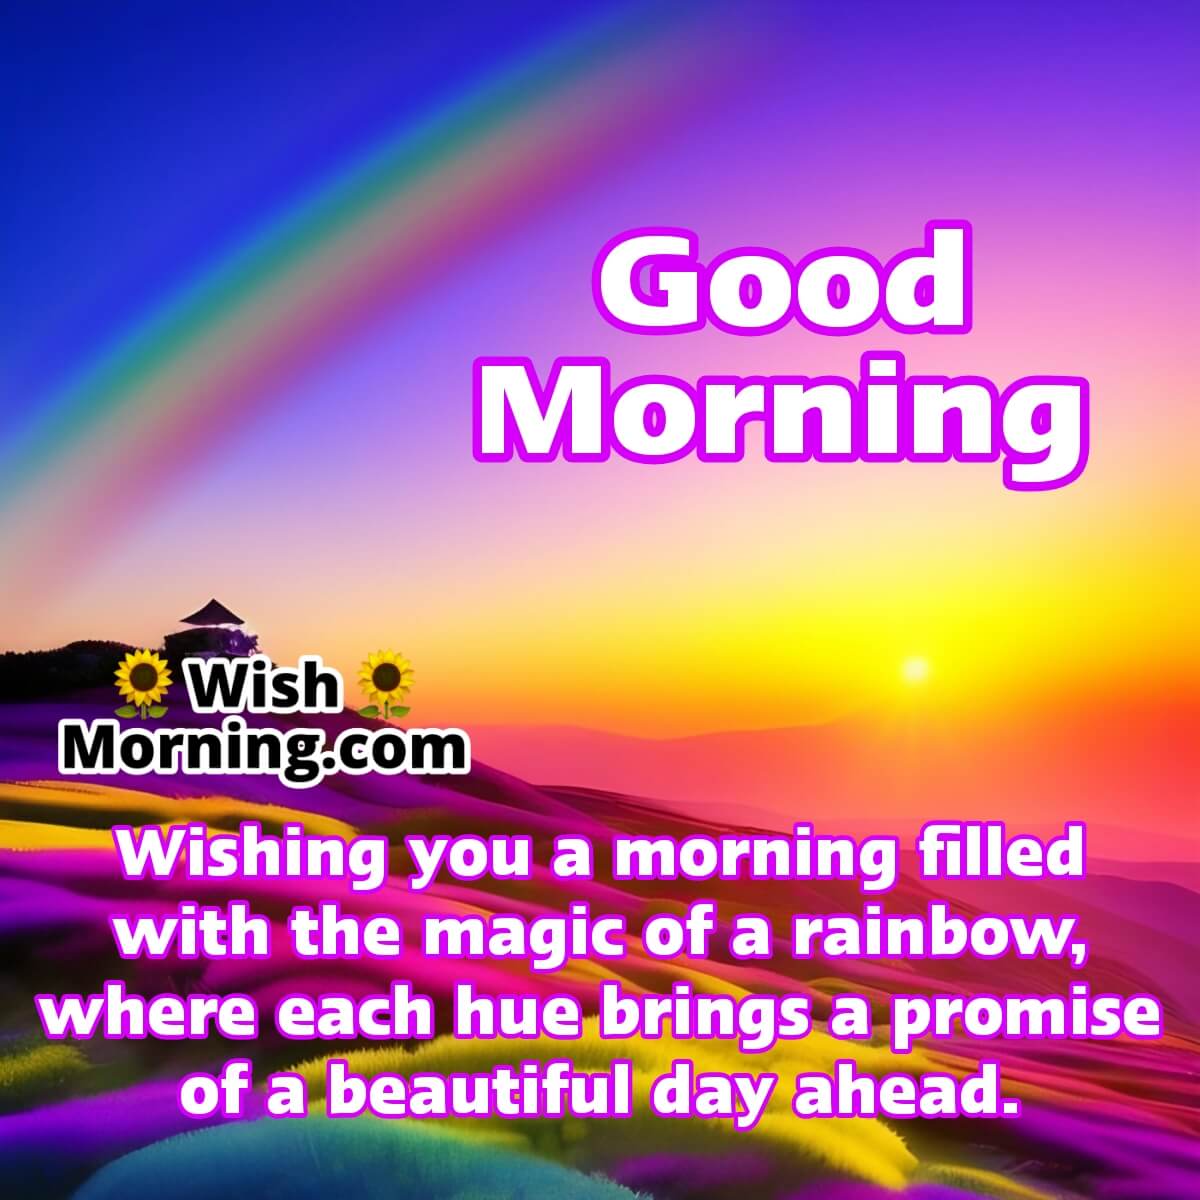 Good Morning Wishes On Rainbow